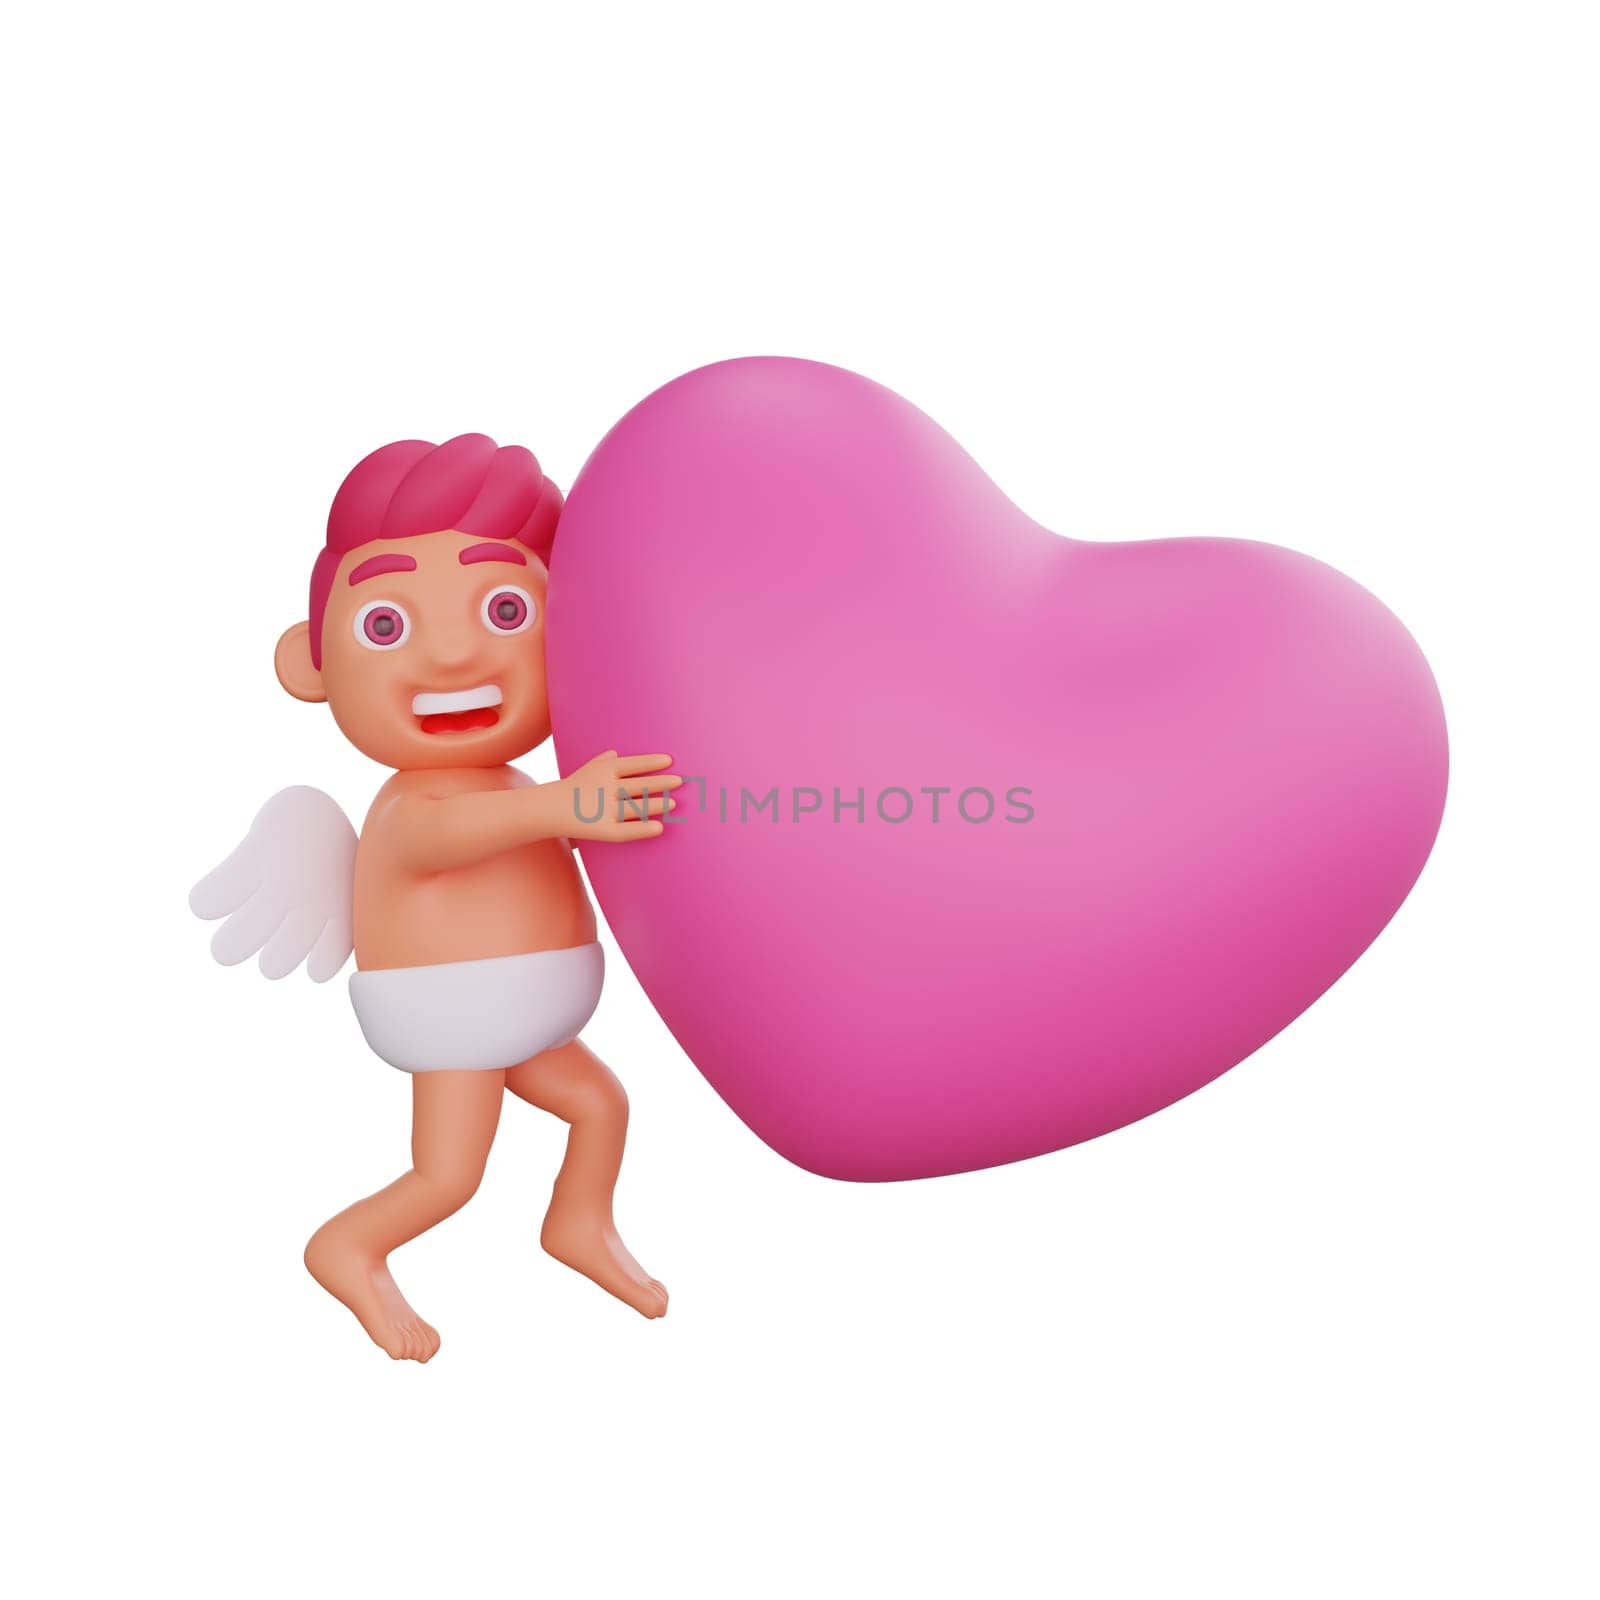 3D illustration of Valentine Cupid character hugging a vibrant pink heart by Rahmat_Djayusman